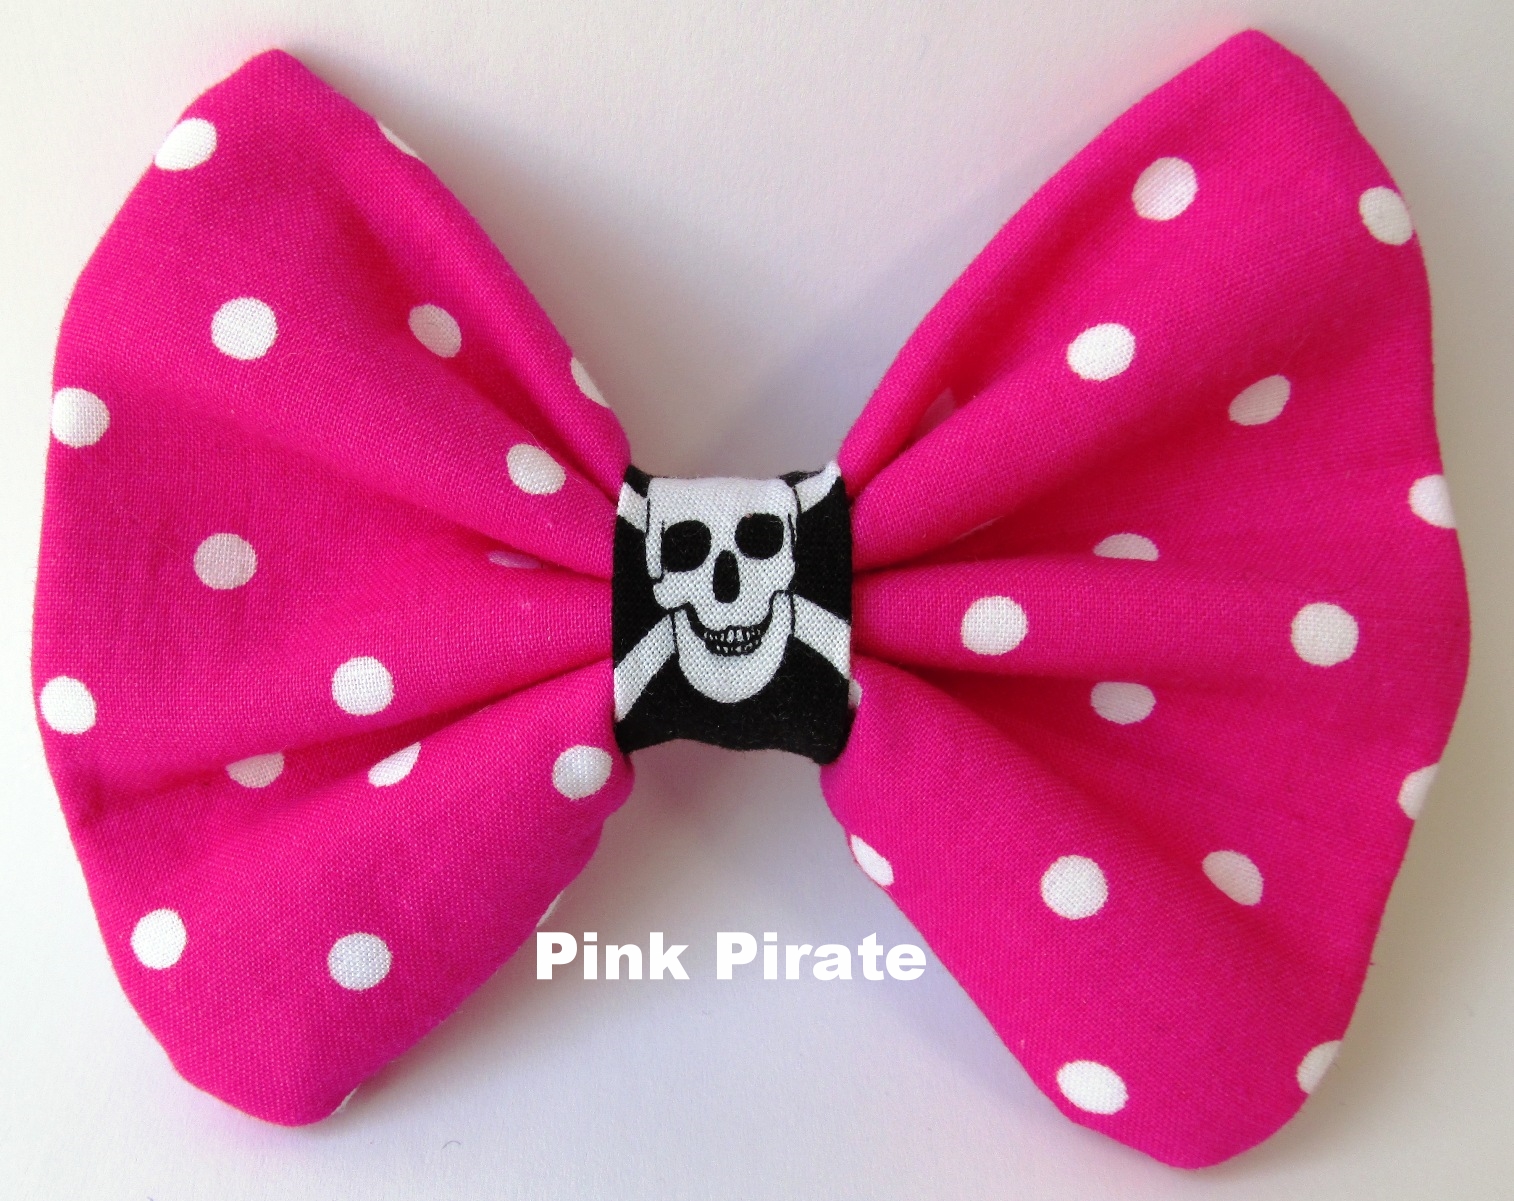 Pink Pirate 4514 final.jpg